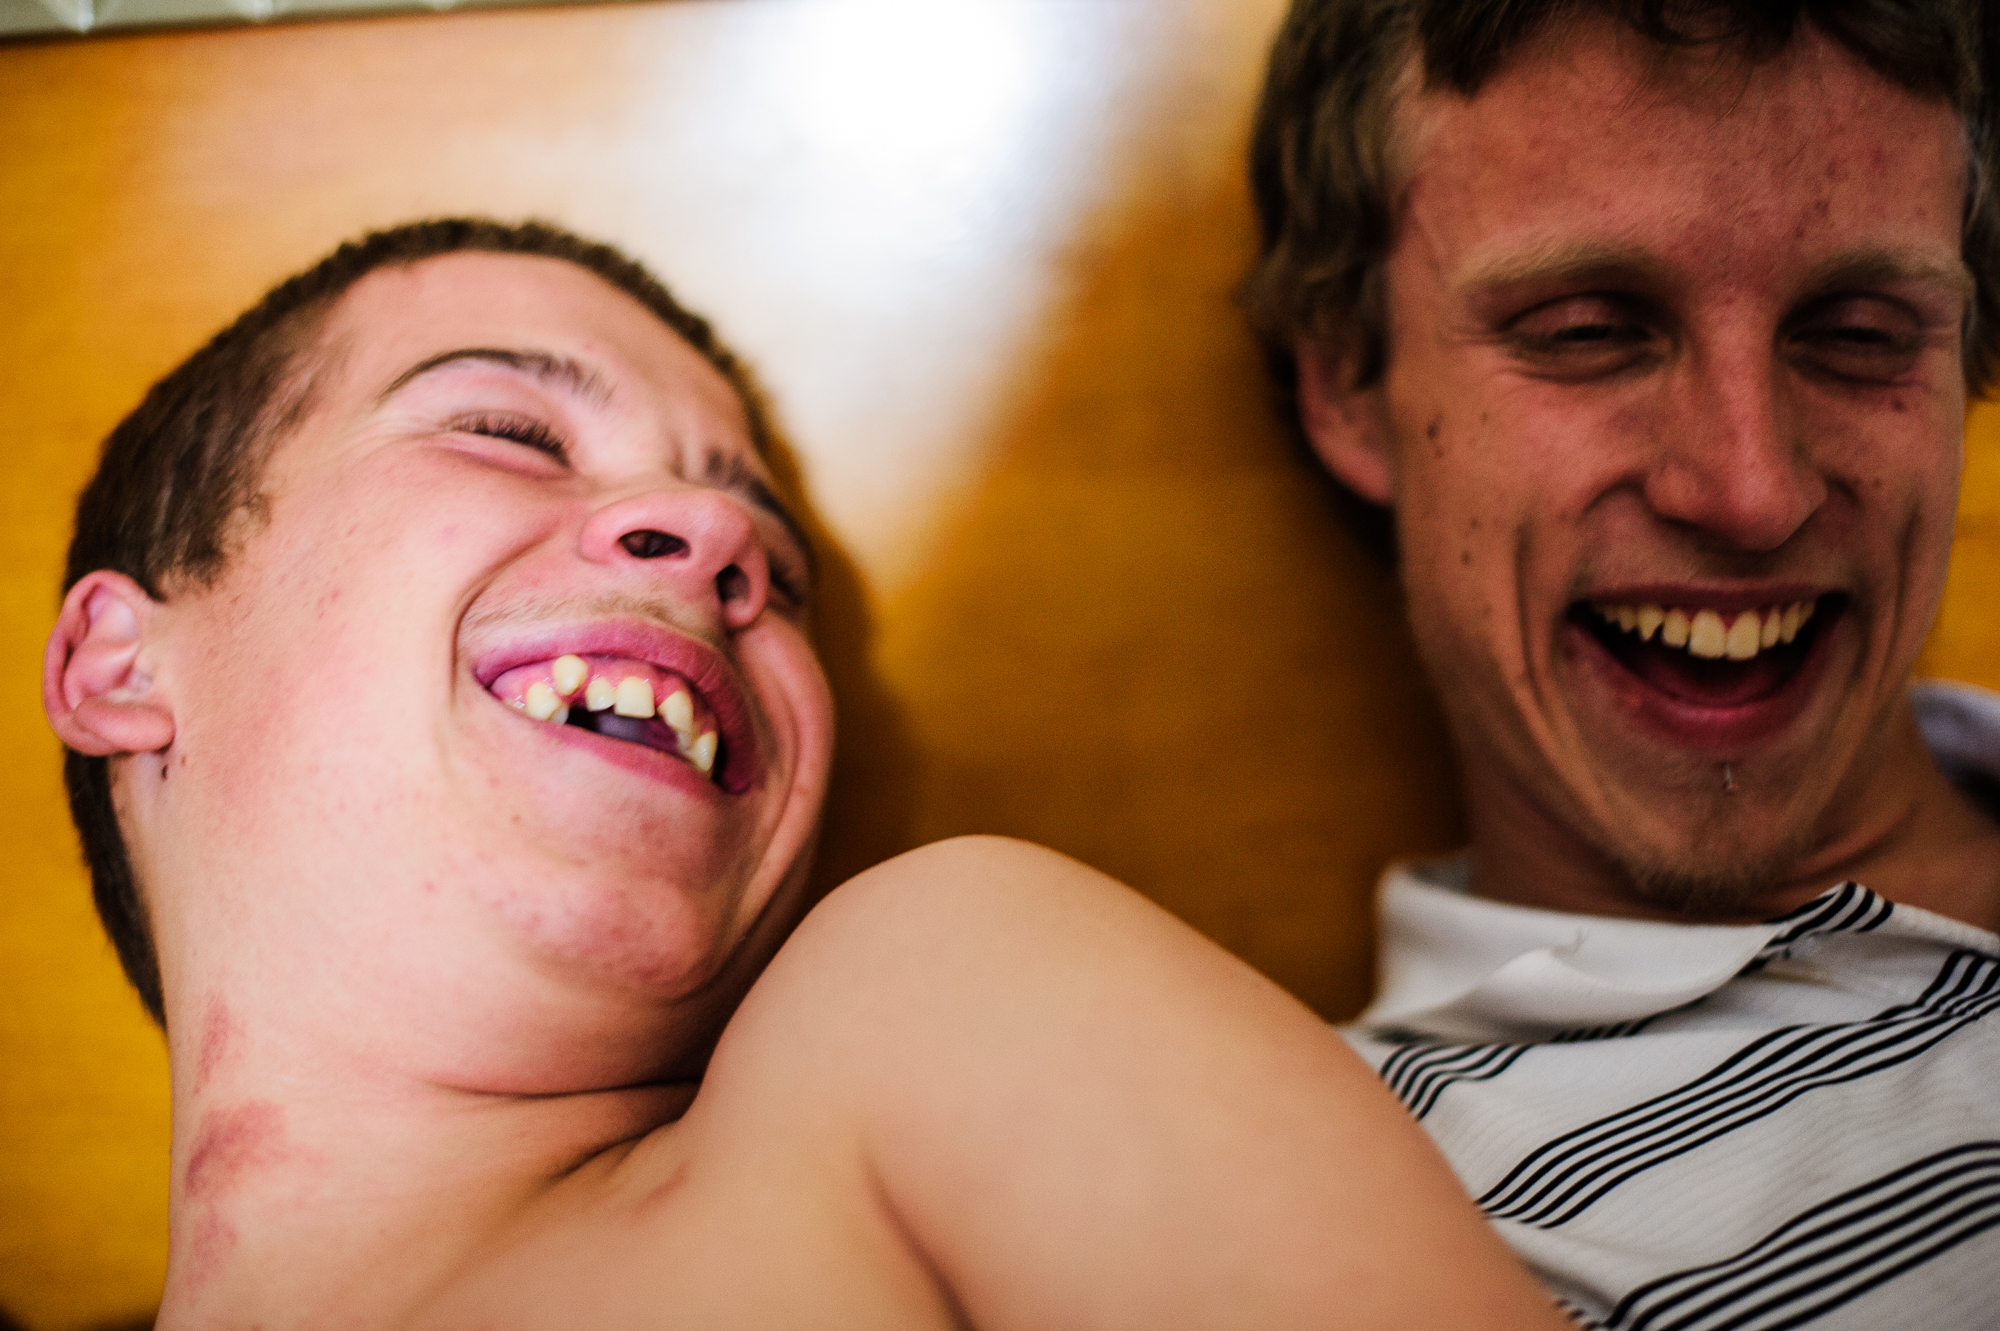  Vinny, age 15, and David, age 21, laugh, 2014. 